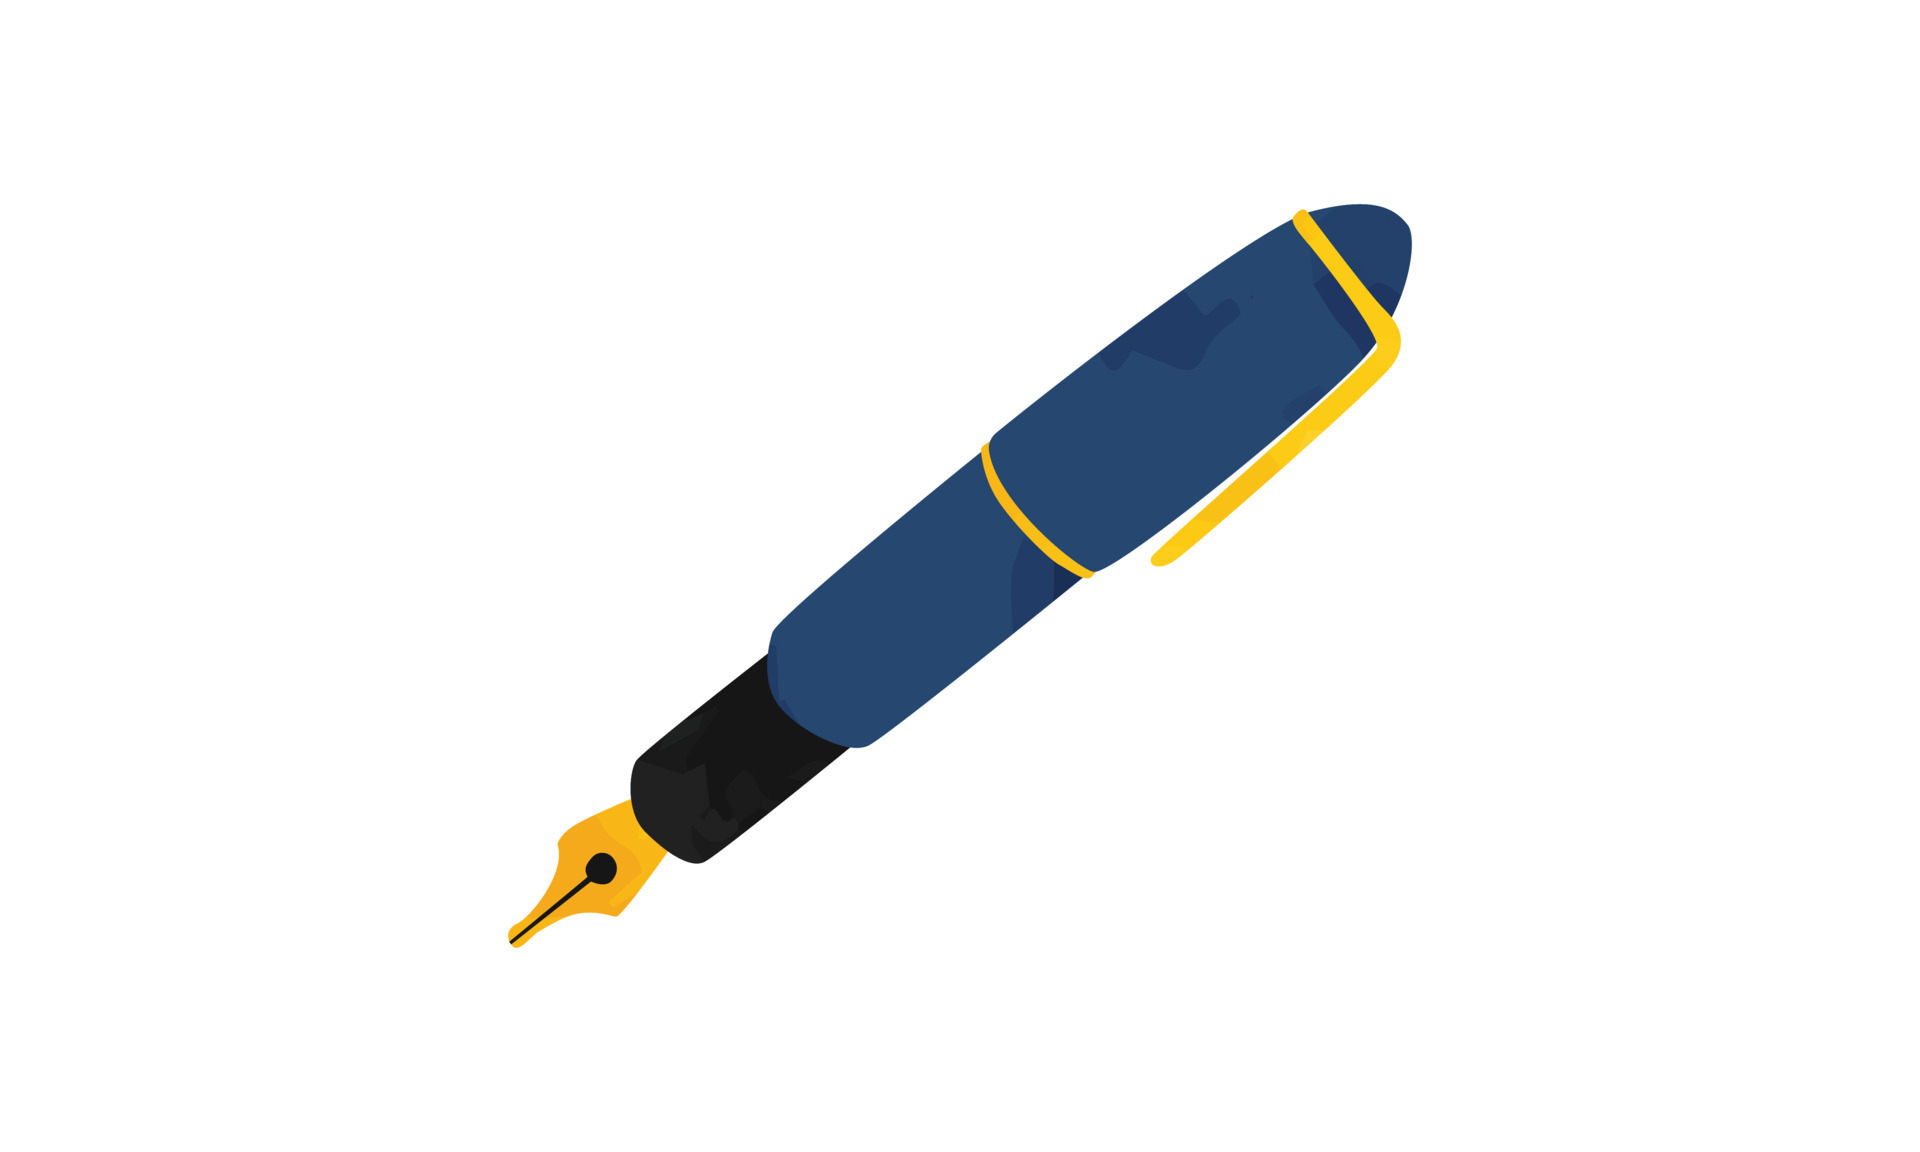 Hatch clipart Scribble sketch pencil texture Scratch pen grunge shape  Stock Vector  Adobe Stock